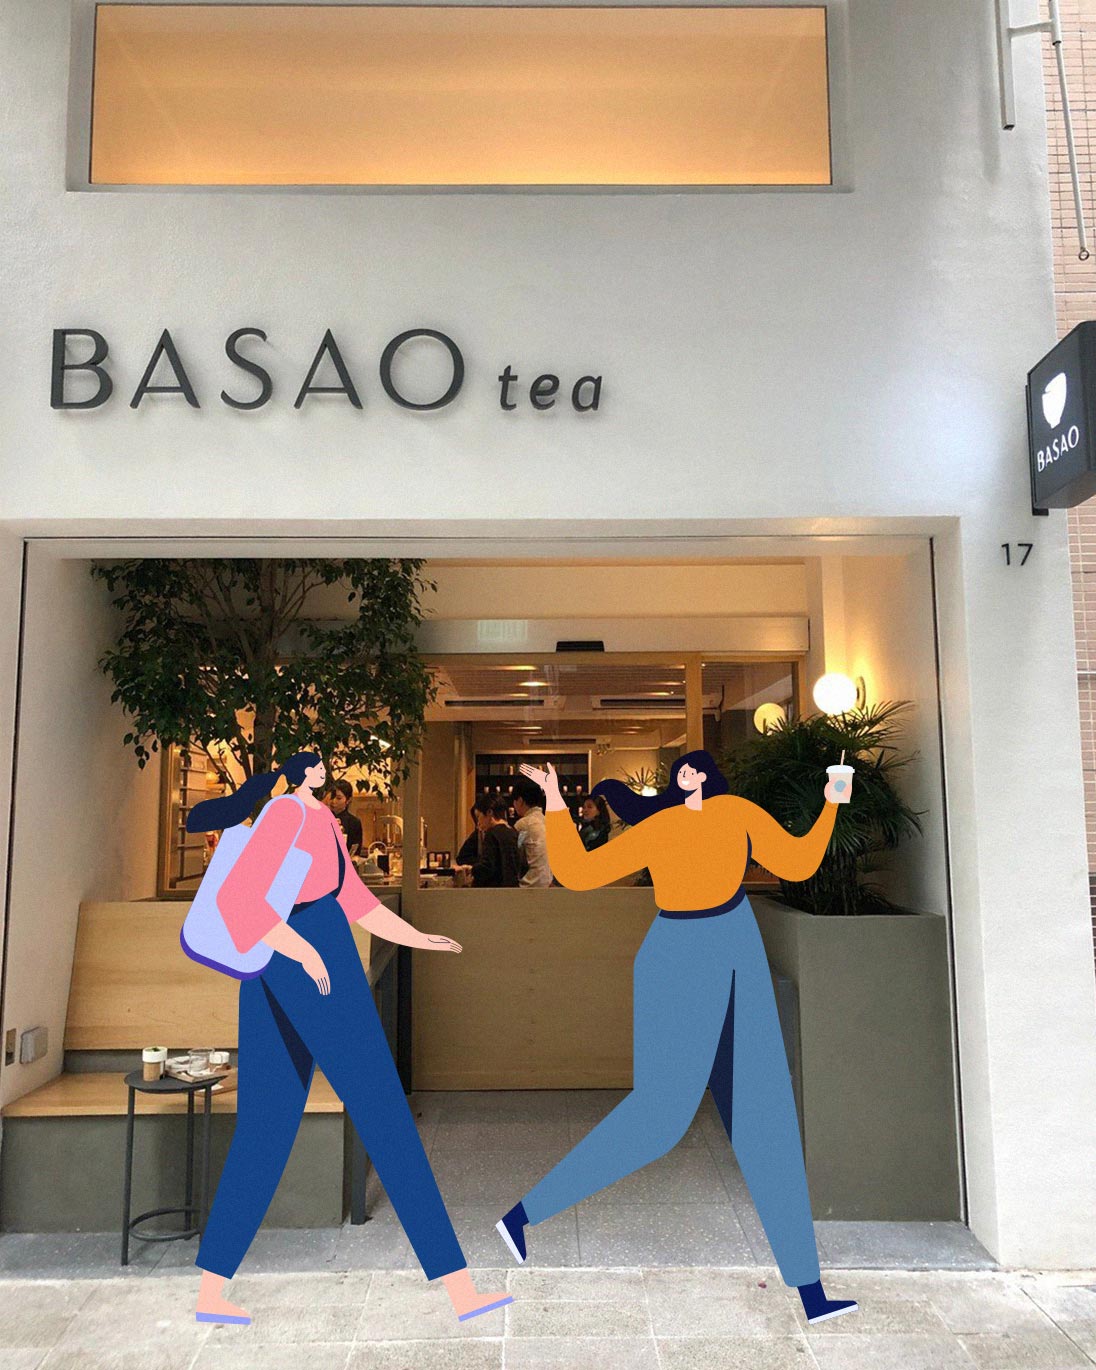 Basao Tea in Starstreet Precinct